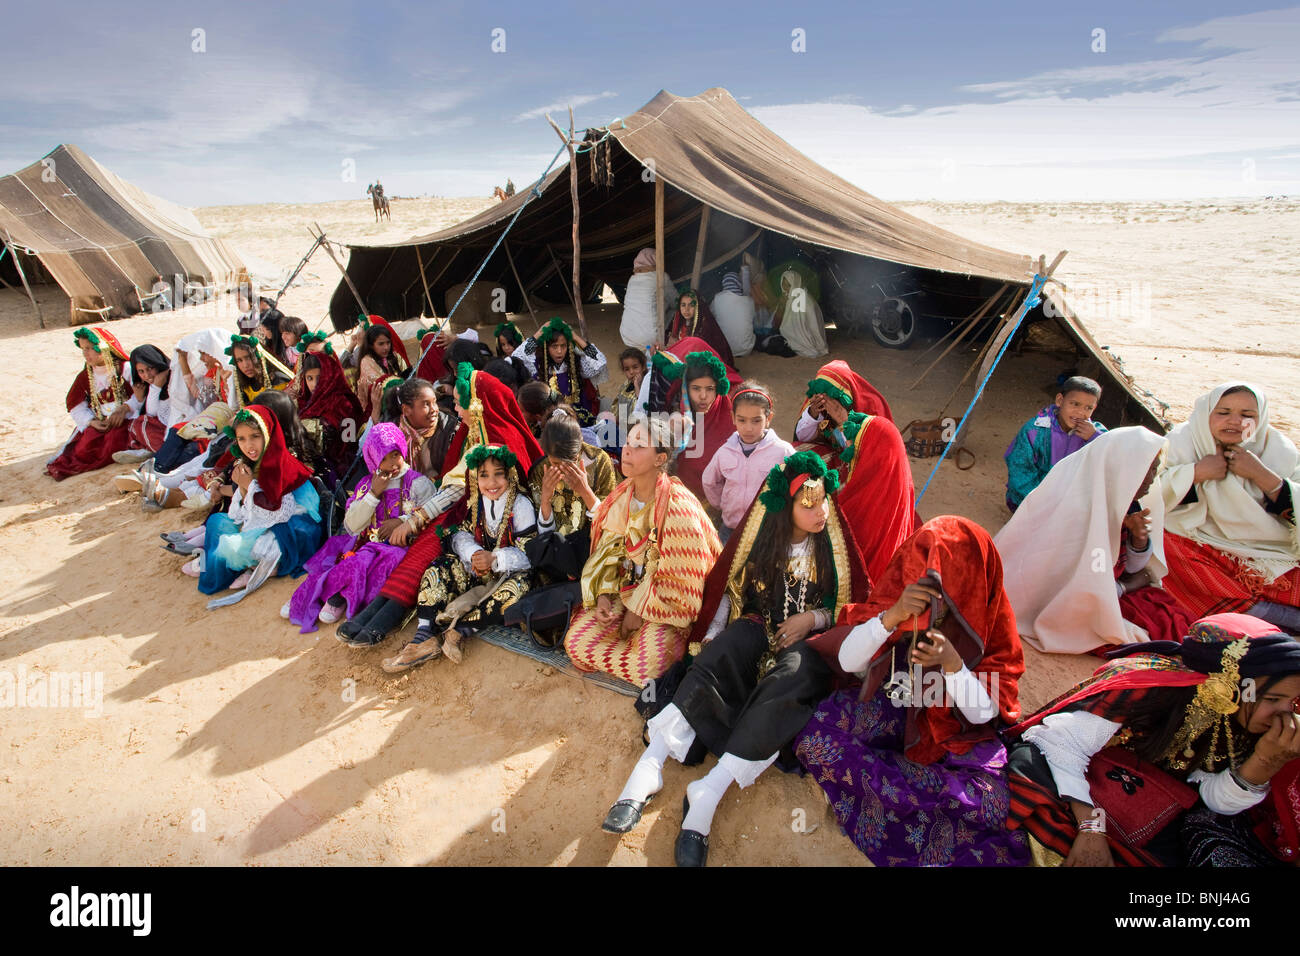 Tunisia Africa North Africa Arabian Arabic Arab Douz town city Sahara festival Berber people tent folklore custom tradition Stock Photo